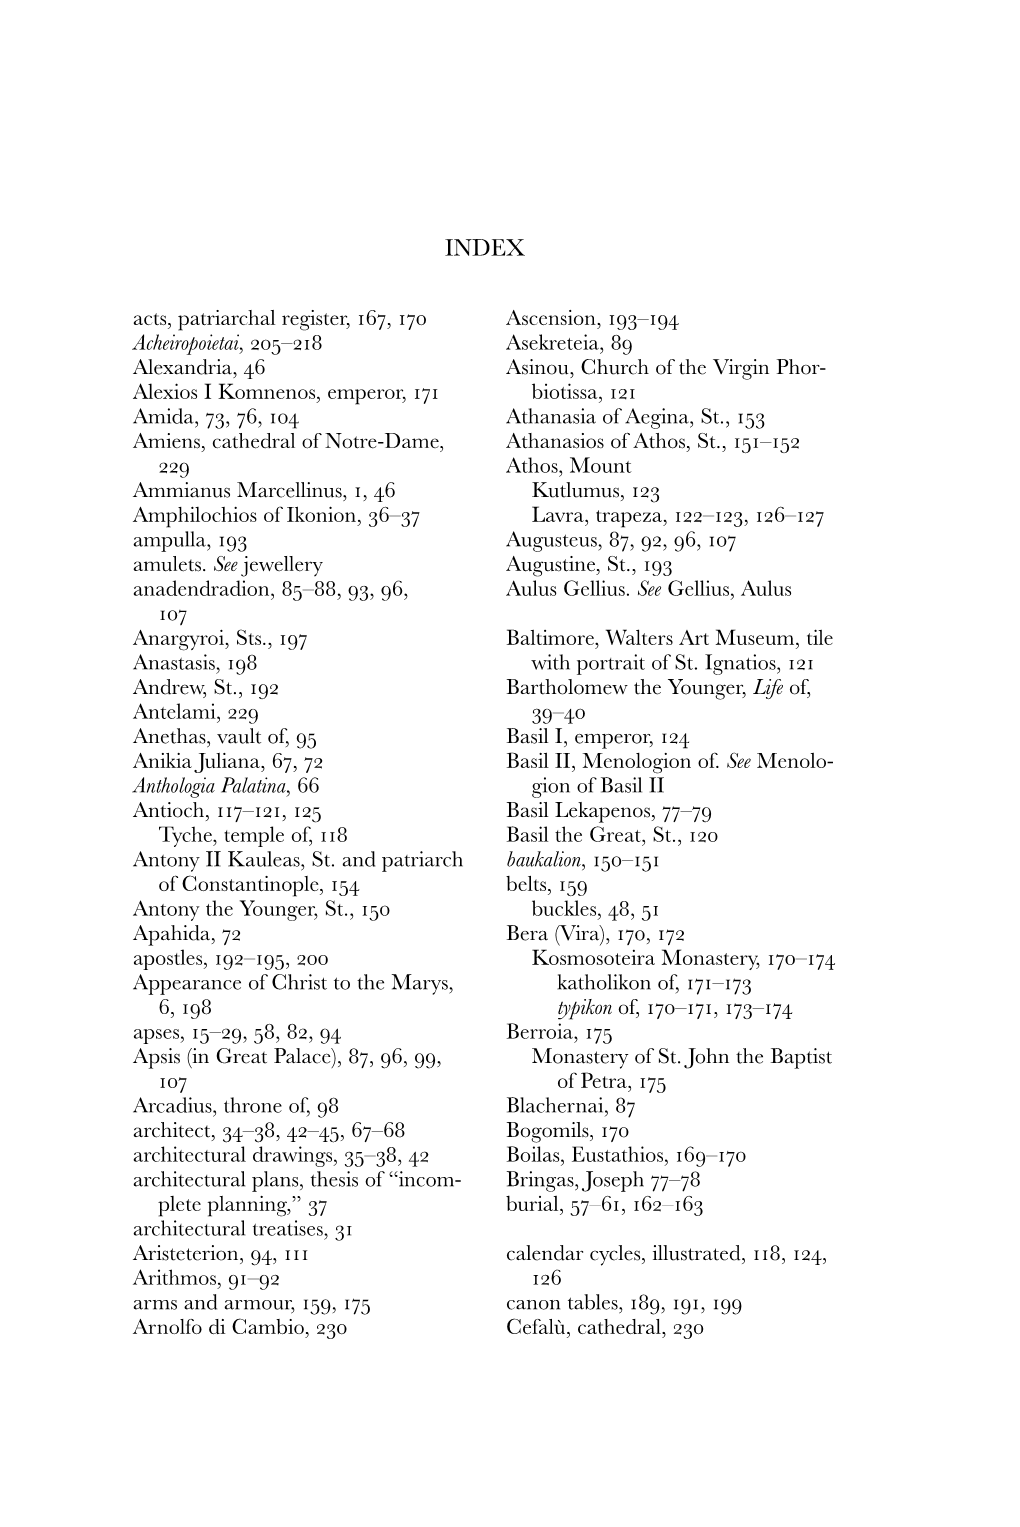 Acts, Patriarchal Register, 167, 170 Acheiropoietai, 205–218